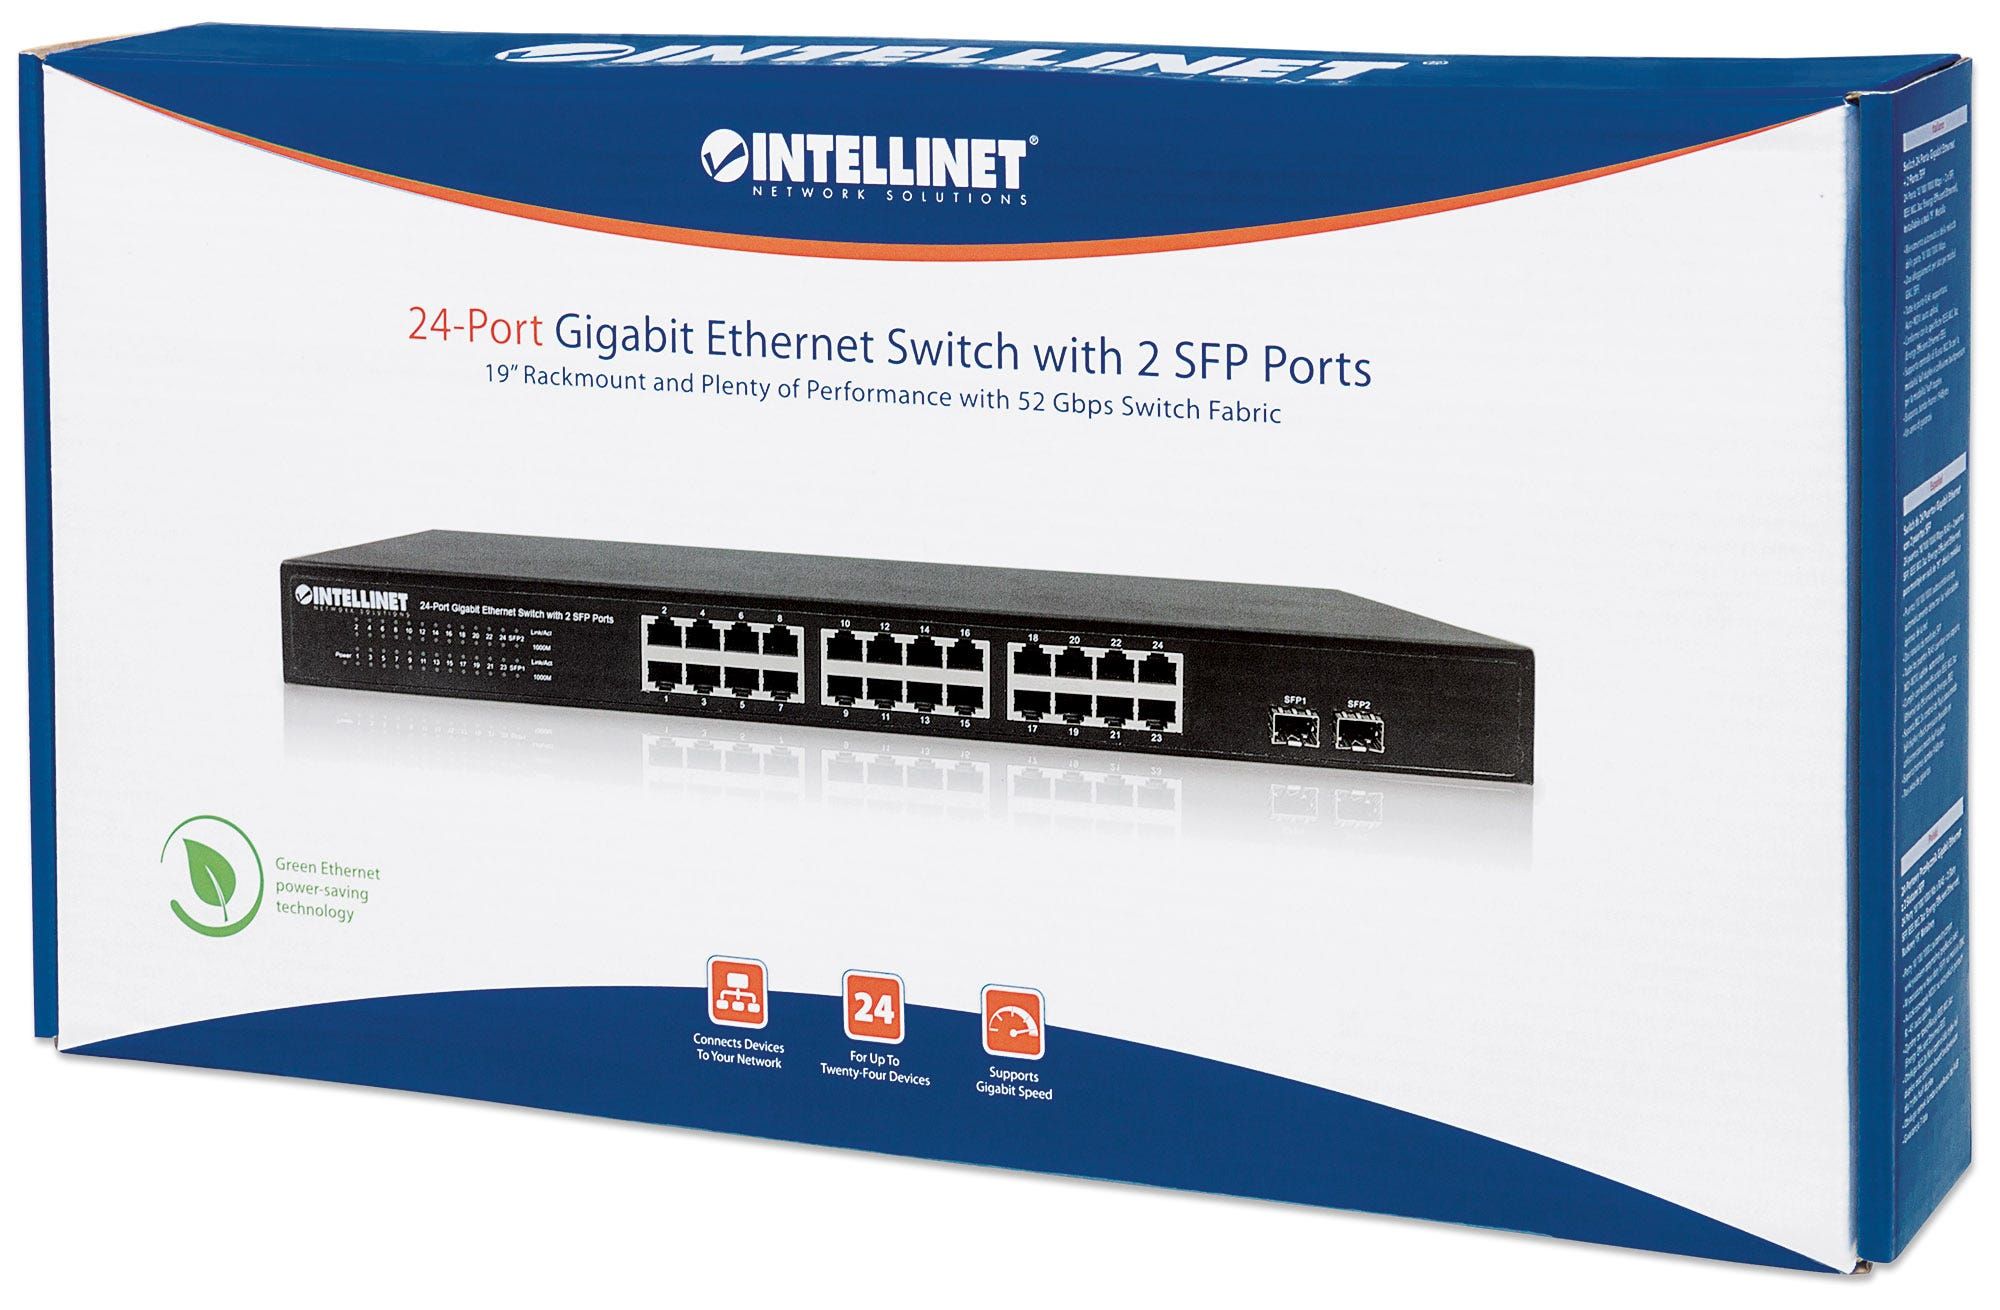 Intellinet 24-Port Gigabit Ethernet Switch with 2 SFP Ports, 24 x 10/100/1000 Mbps RJ45 Ports + 2 x SFP, IEEE 802.3az (Energy Efficient Ethernet), 19